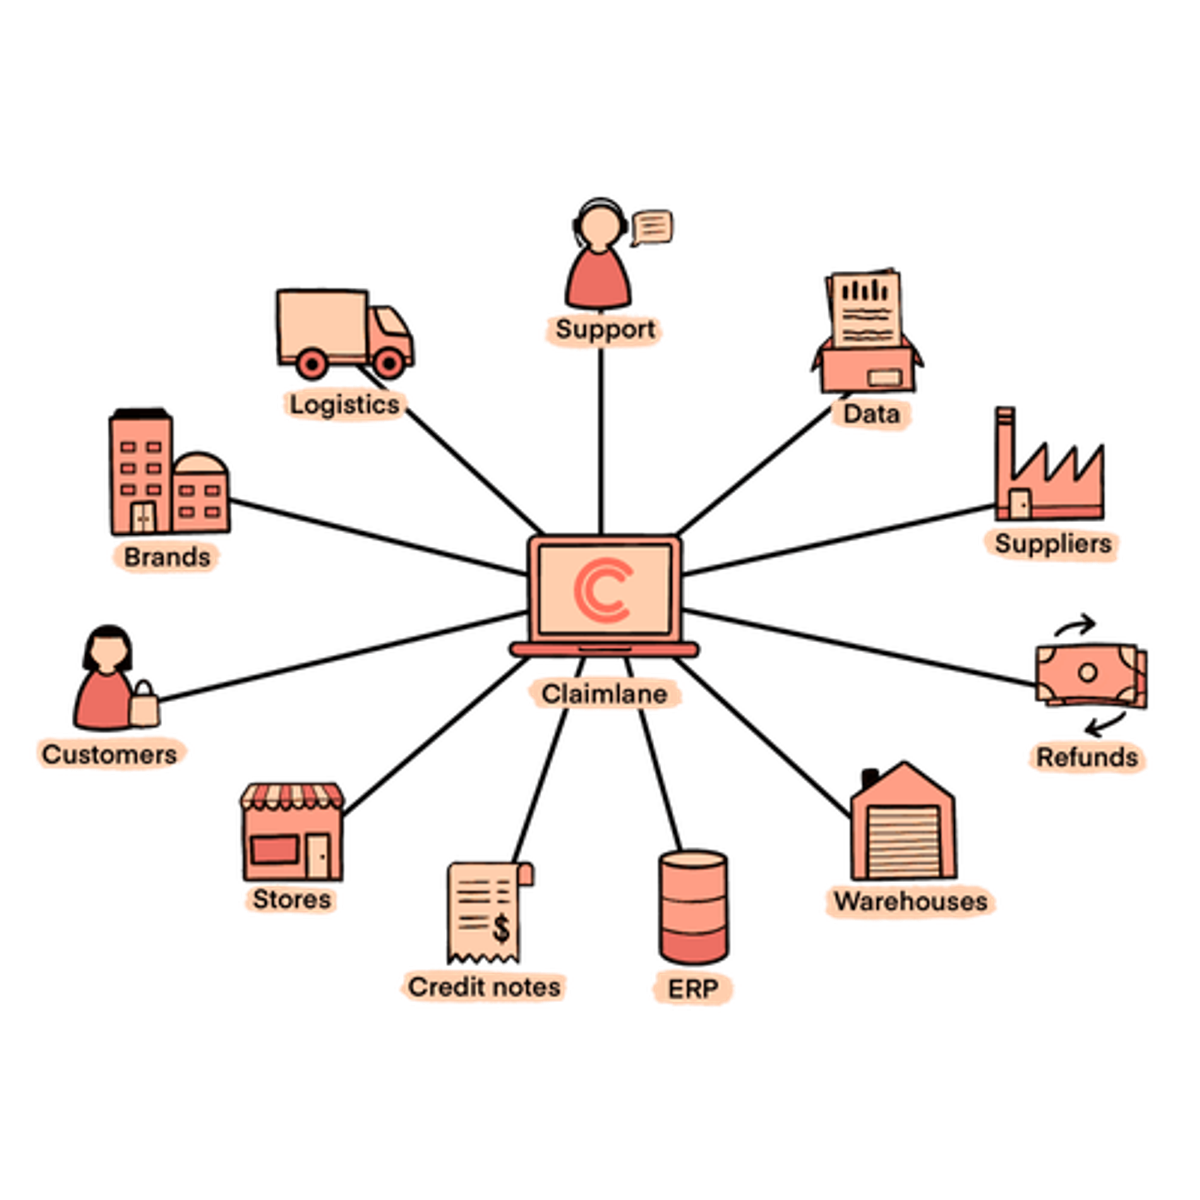 Claimlane supply chain pictogram